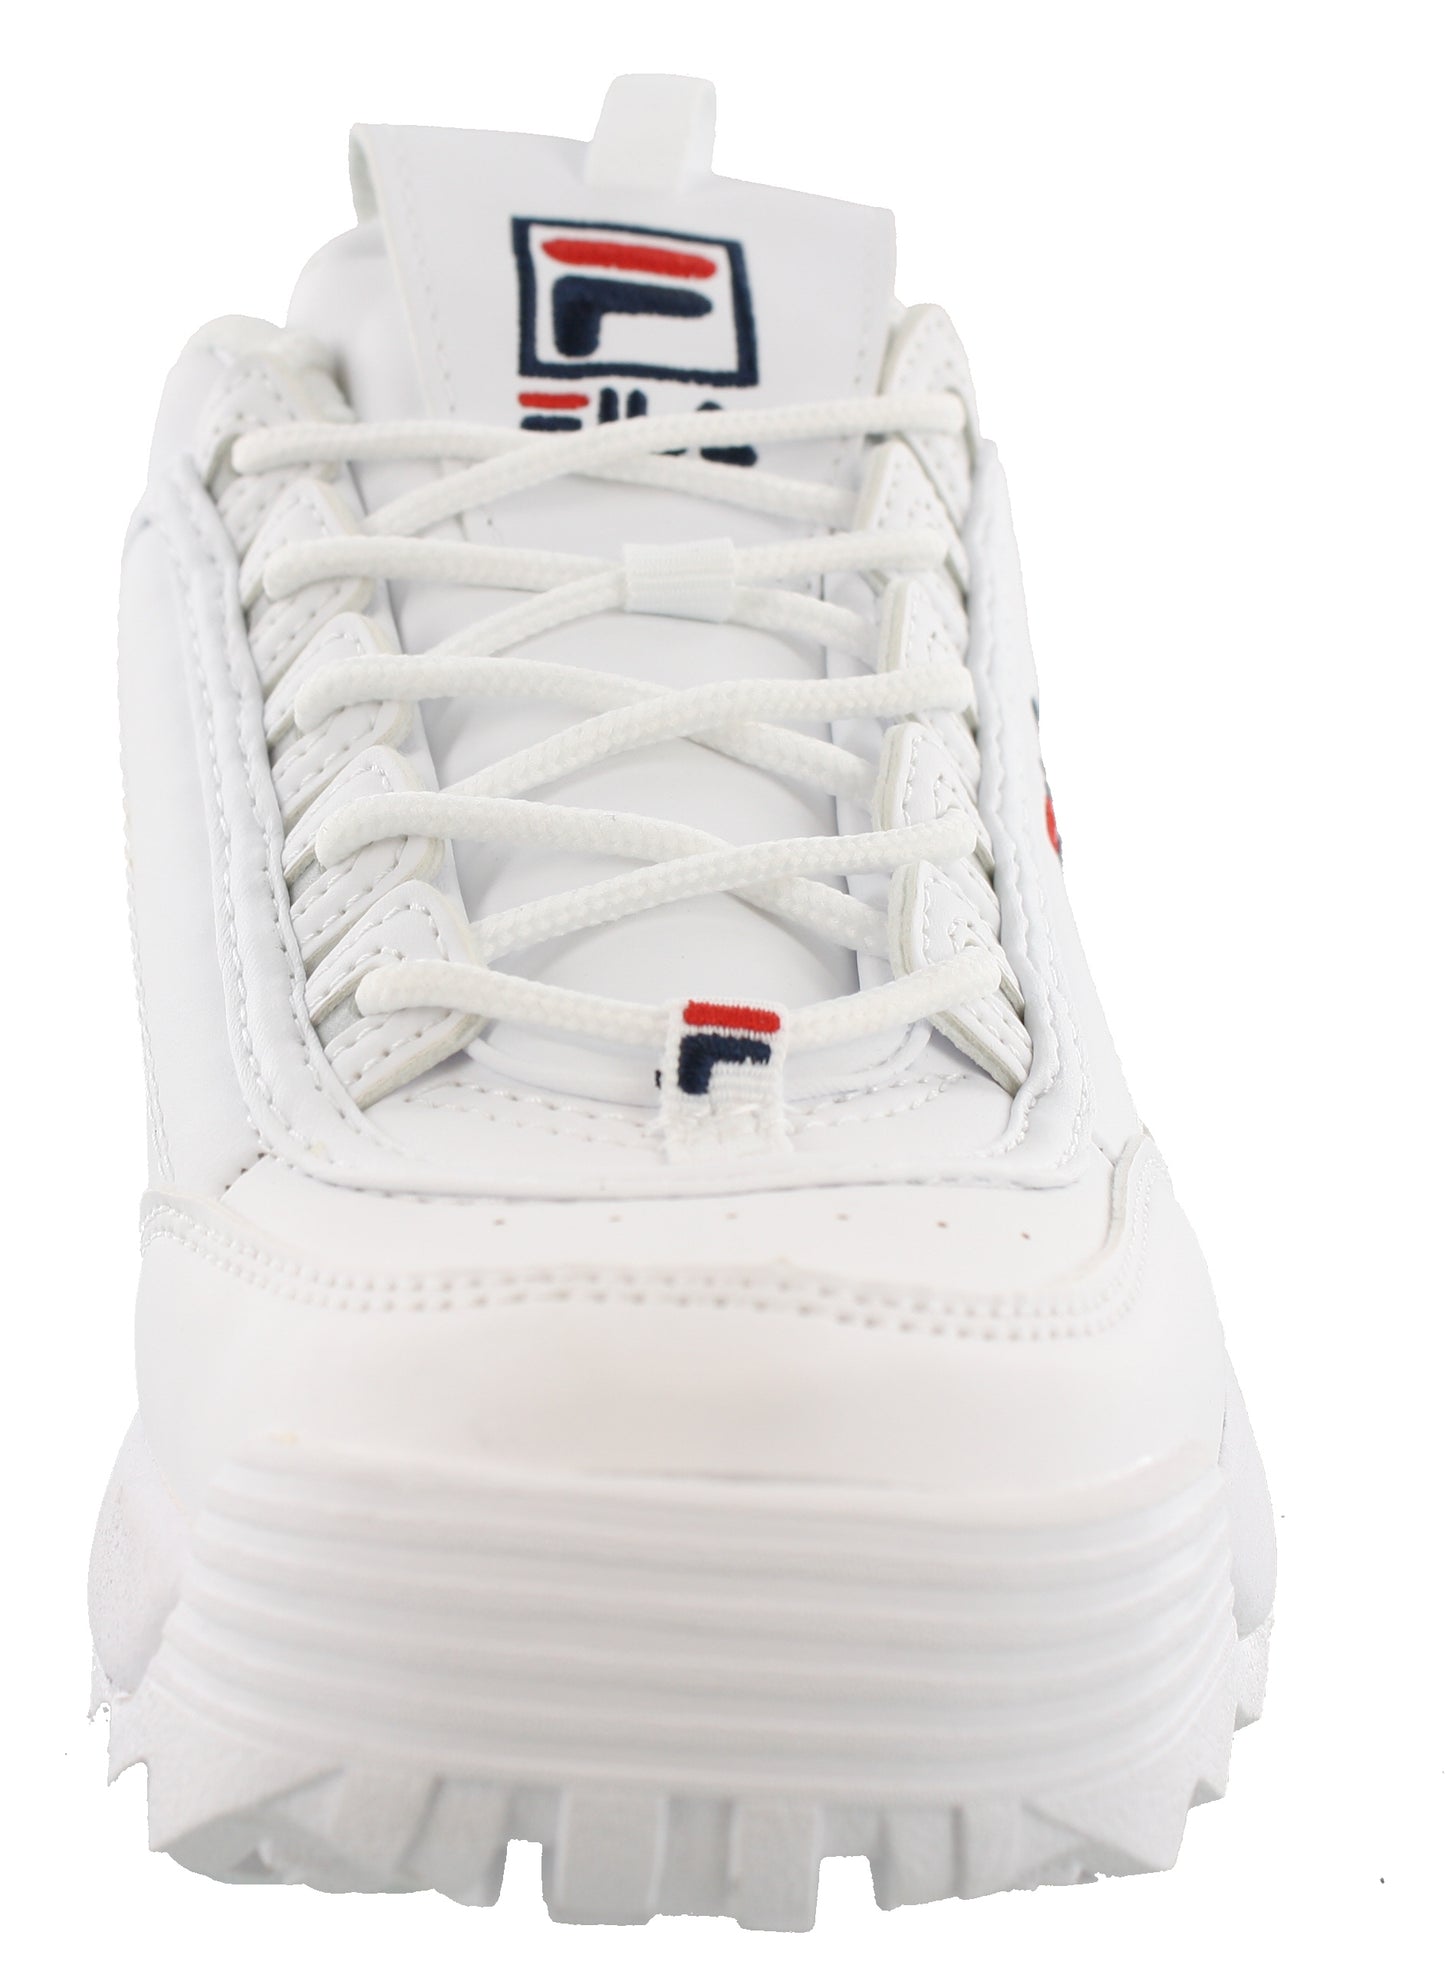 Fila Disruptor 2 Premium Shoes Women's Size 7 White Chunky Sneaker 